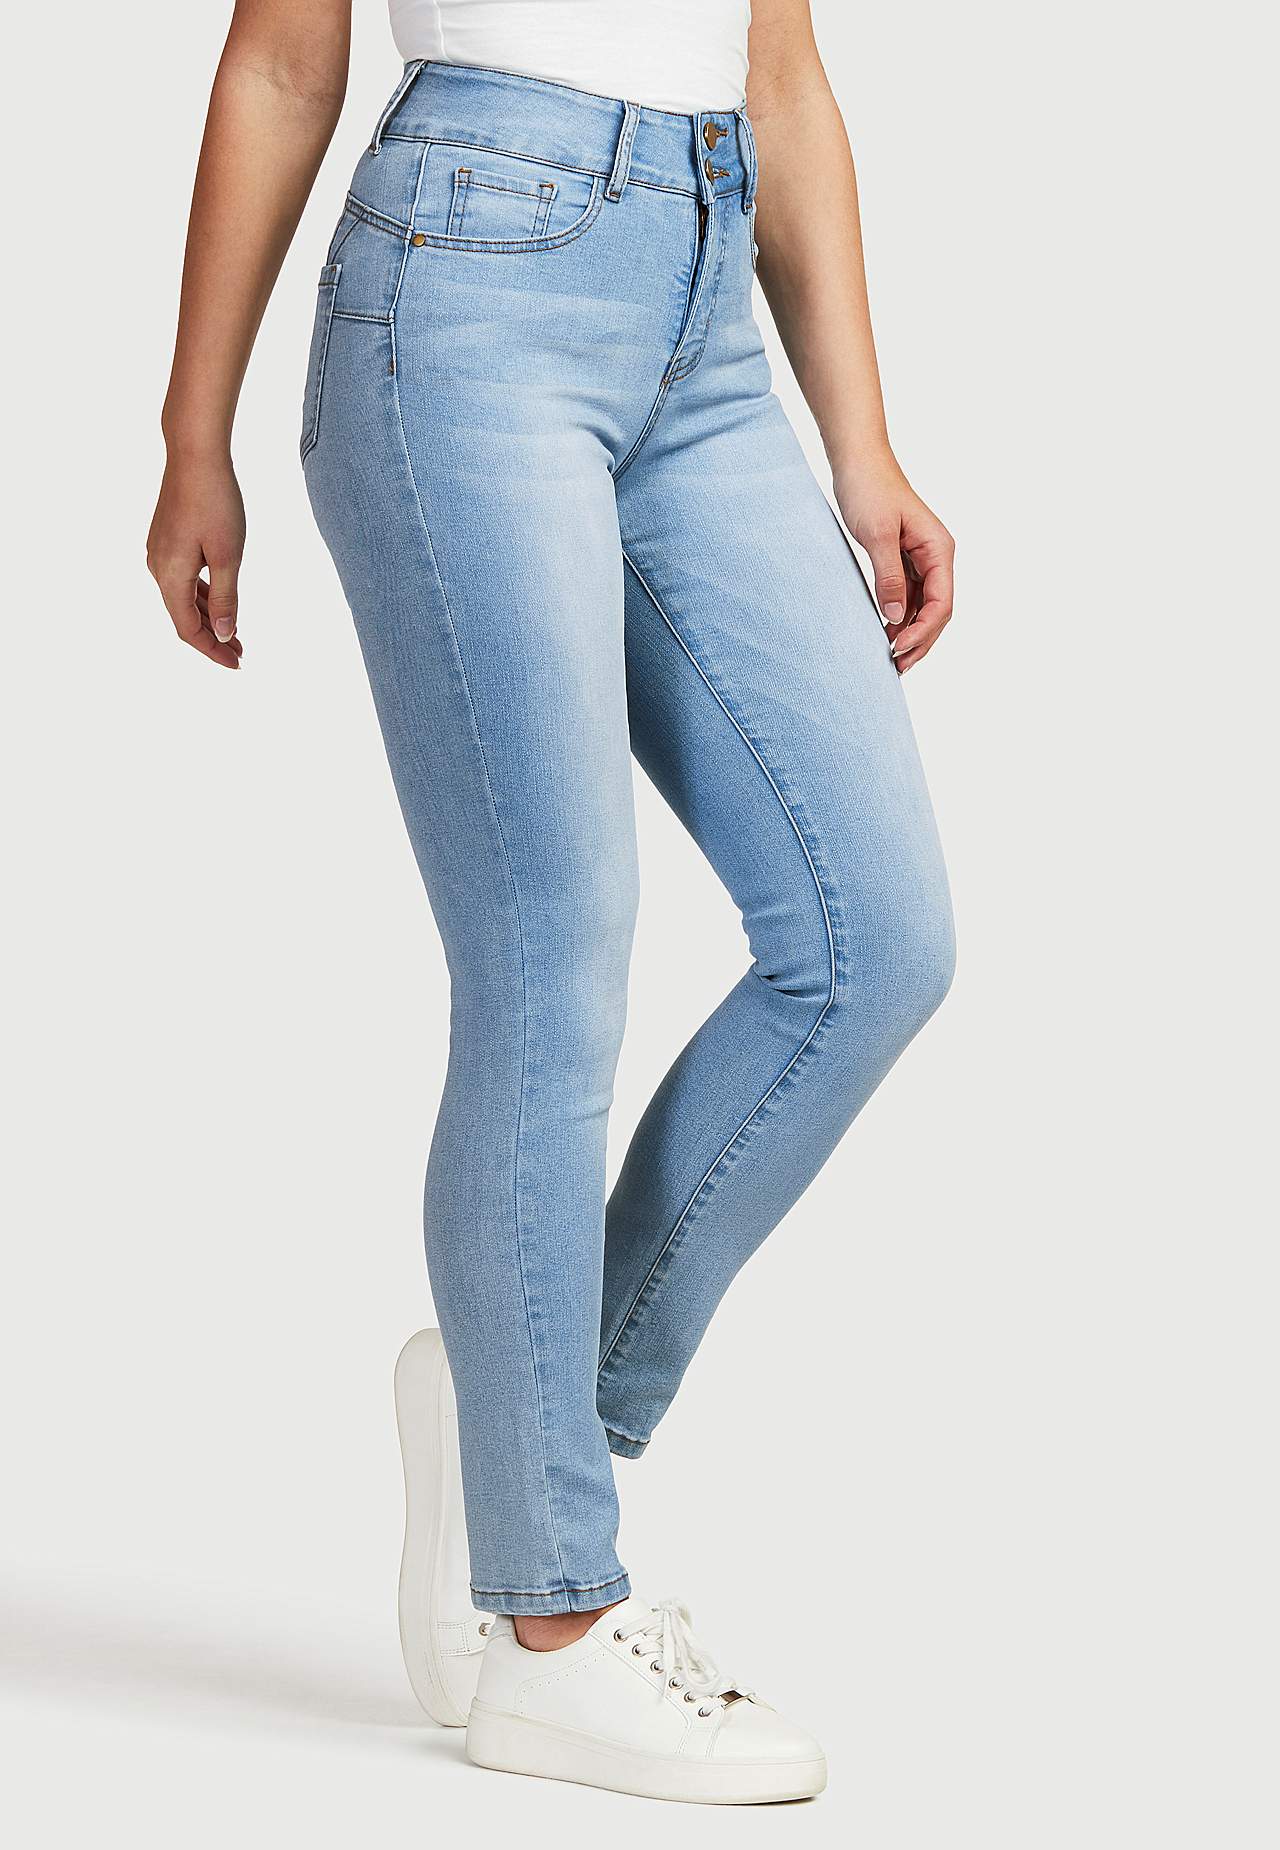 Formende jeans med en høy midje